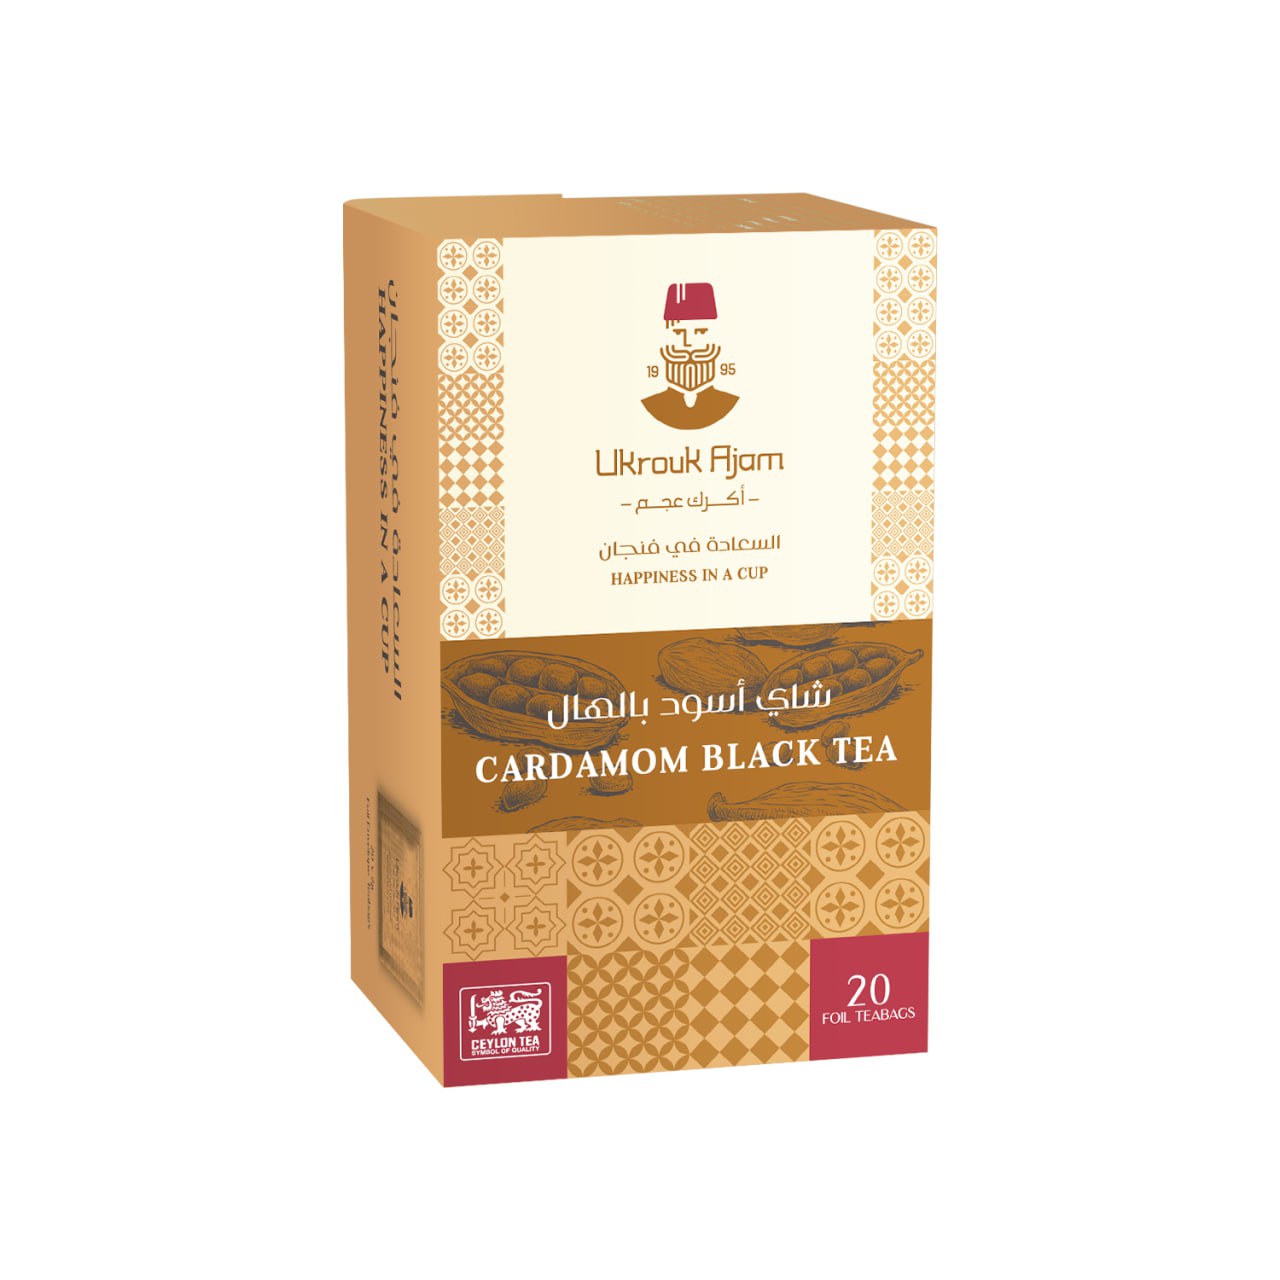 Ukrouk Ajam Cardamom Black Tea, 20 Foiled Tea Bags